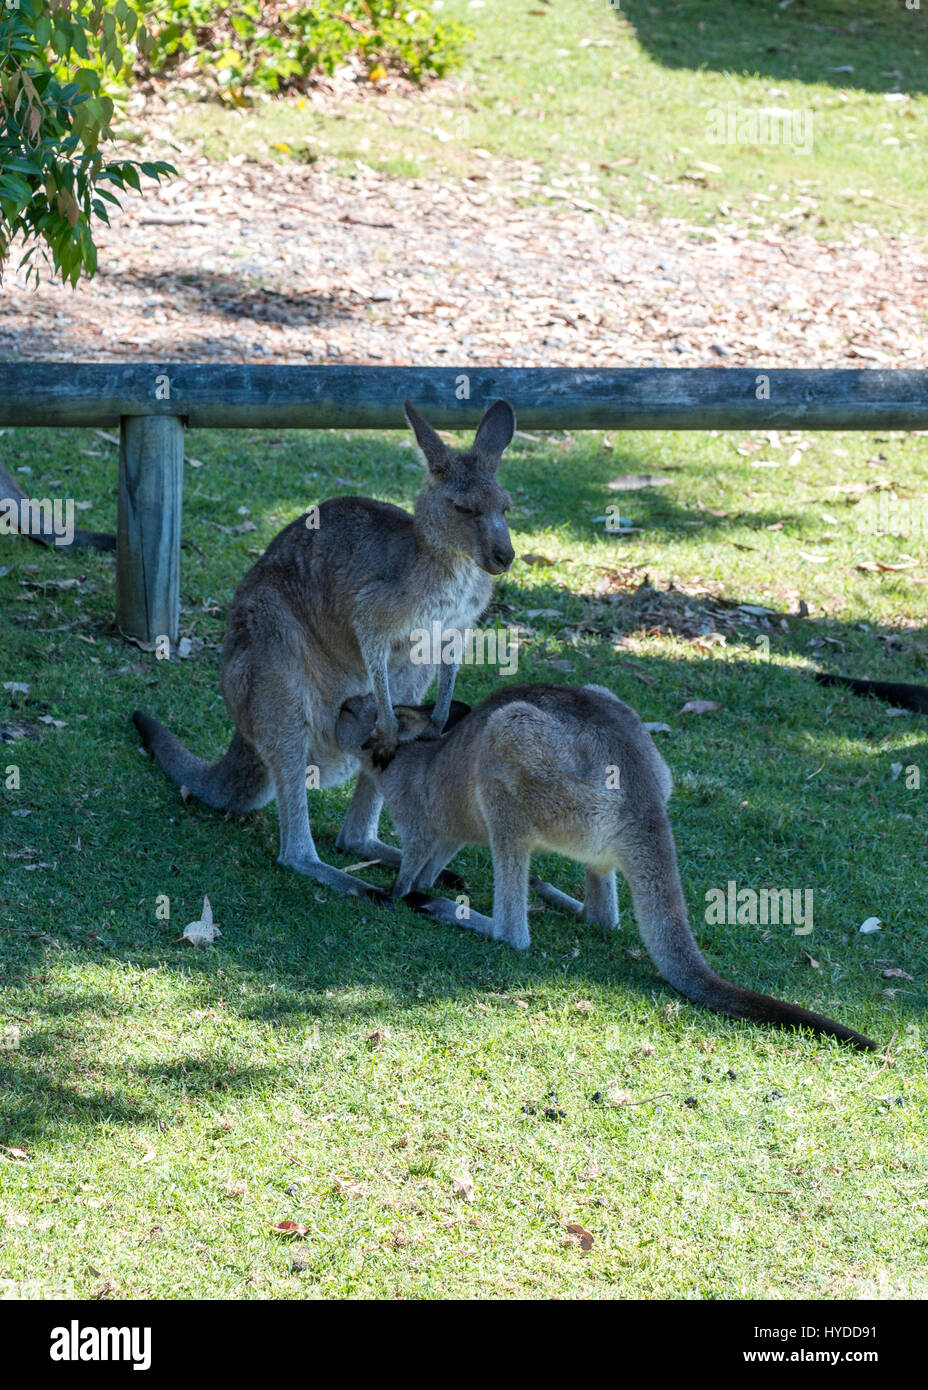 A nursing joey with its mother kangaroo in Australia Stock Photo